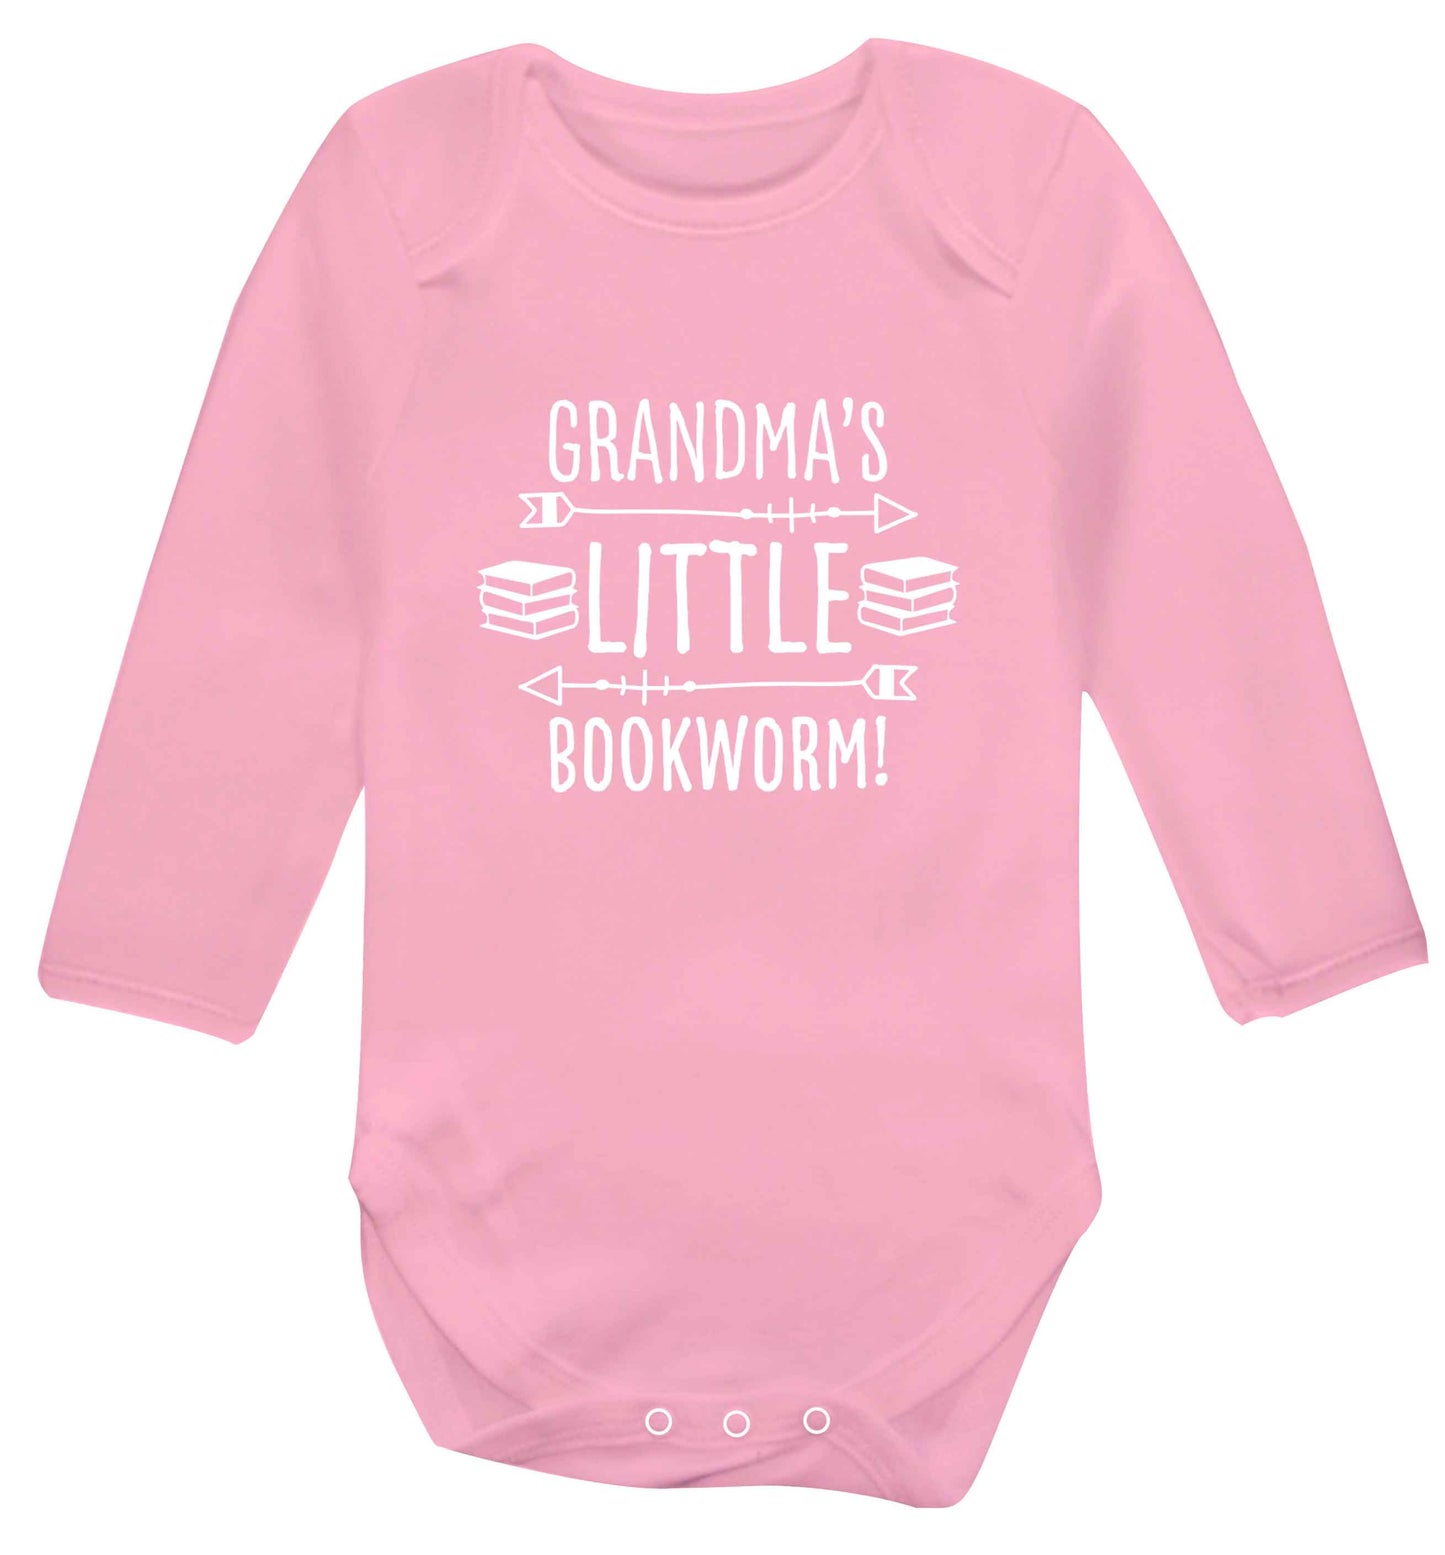 Grandma's little bookworm baby vest long sleeved pale pink 6-12 months